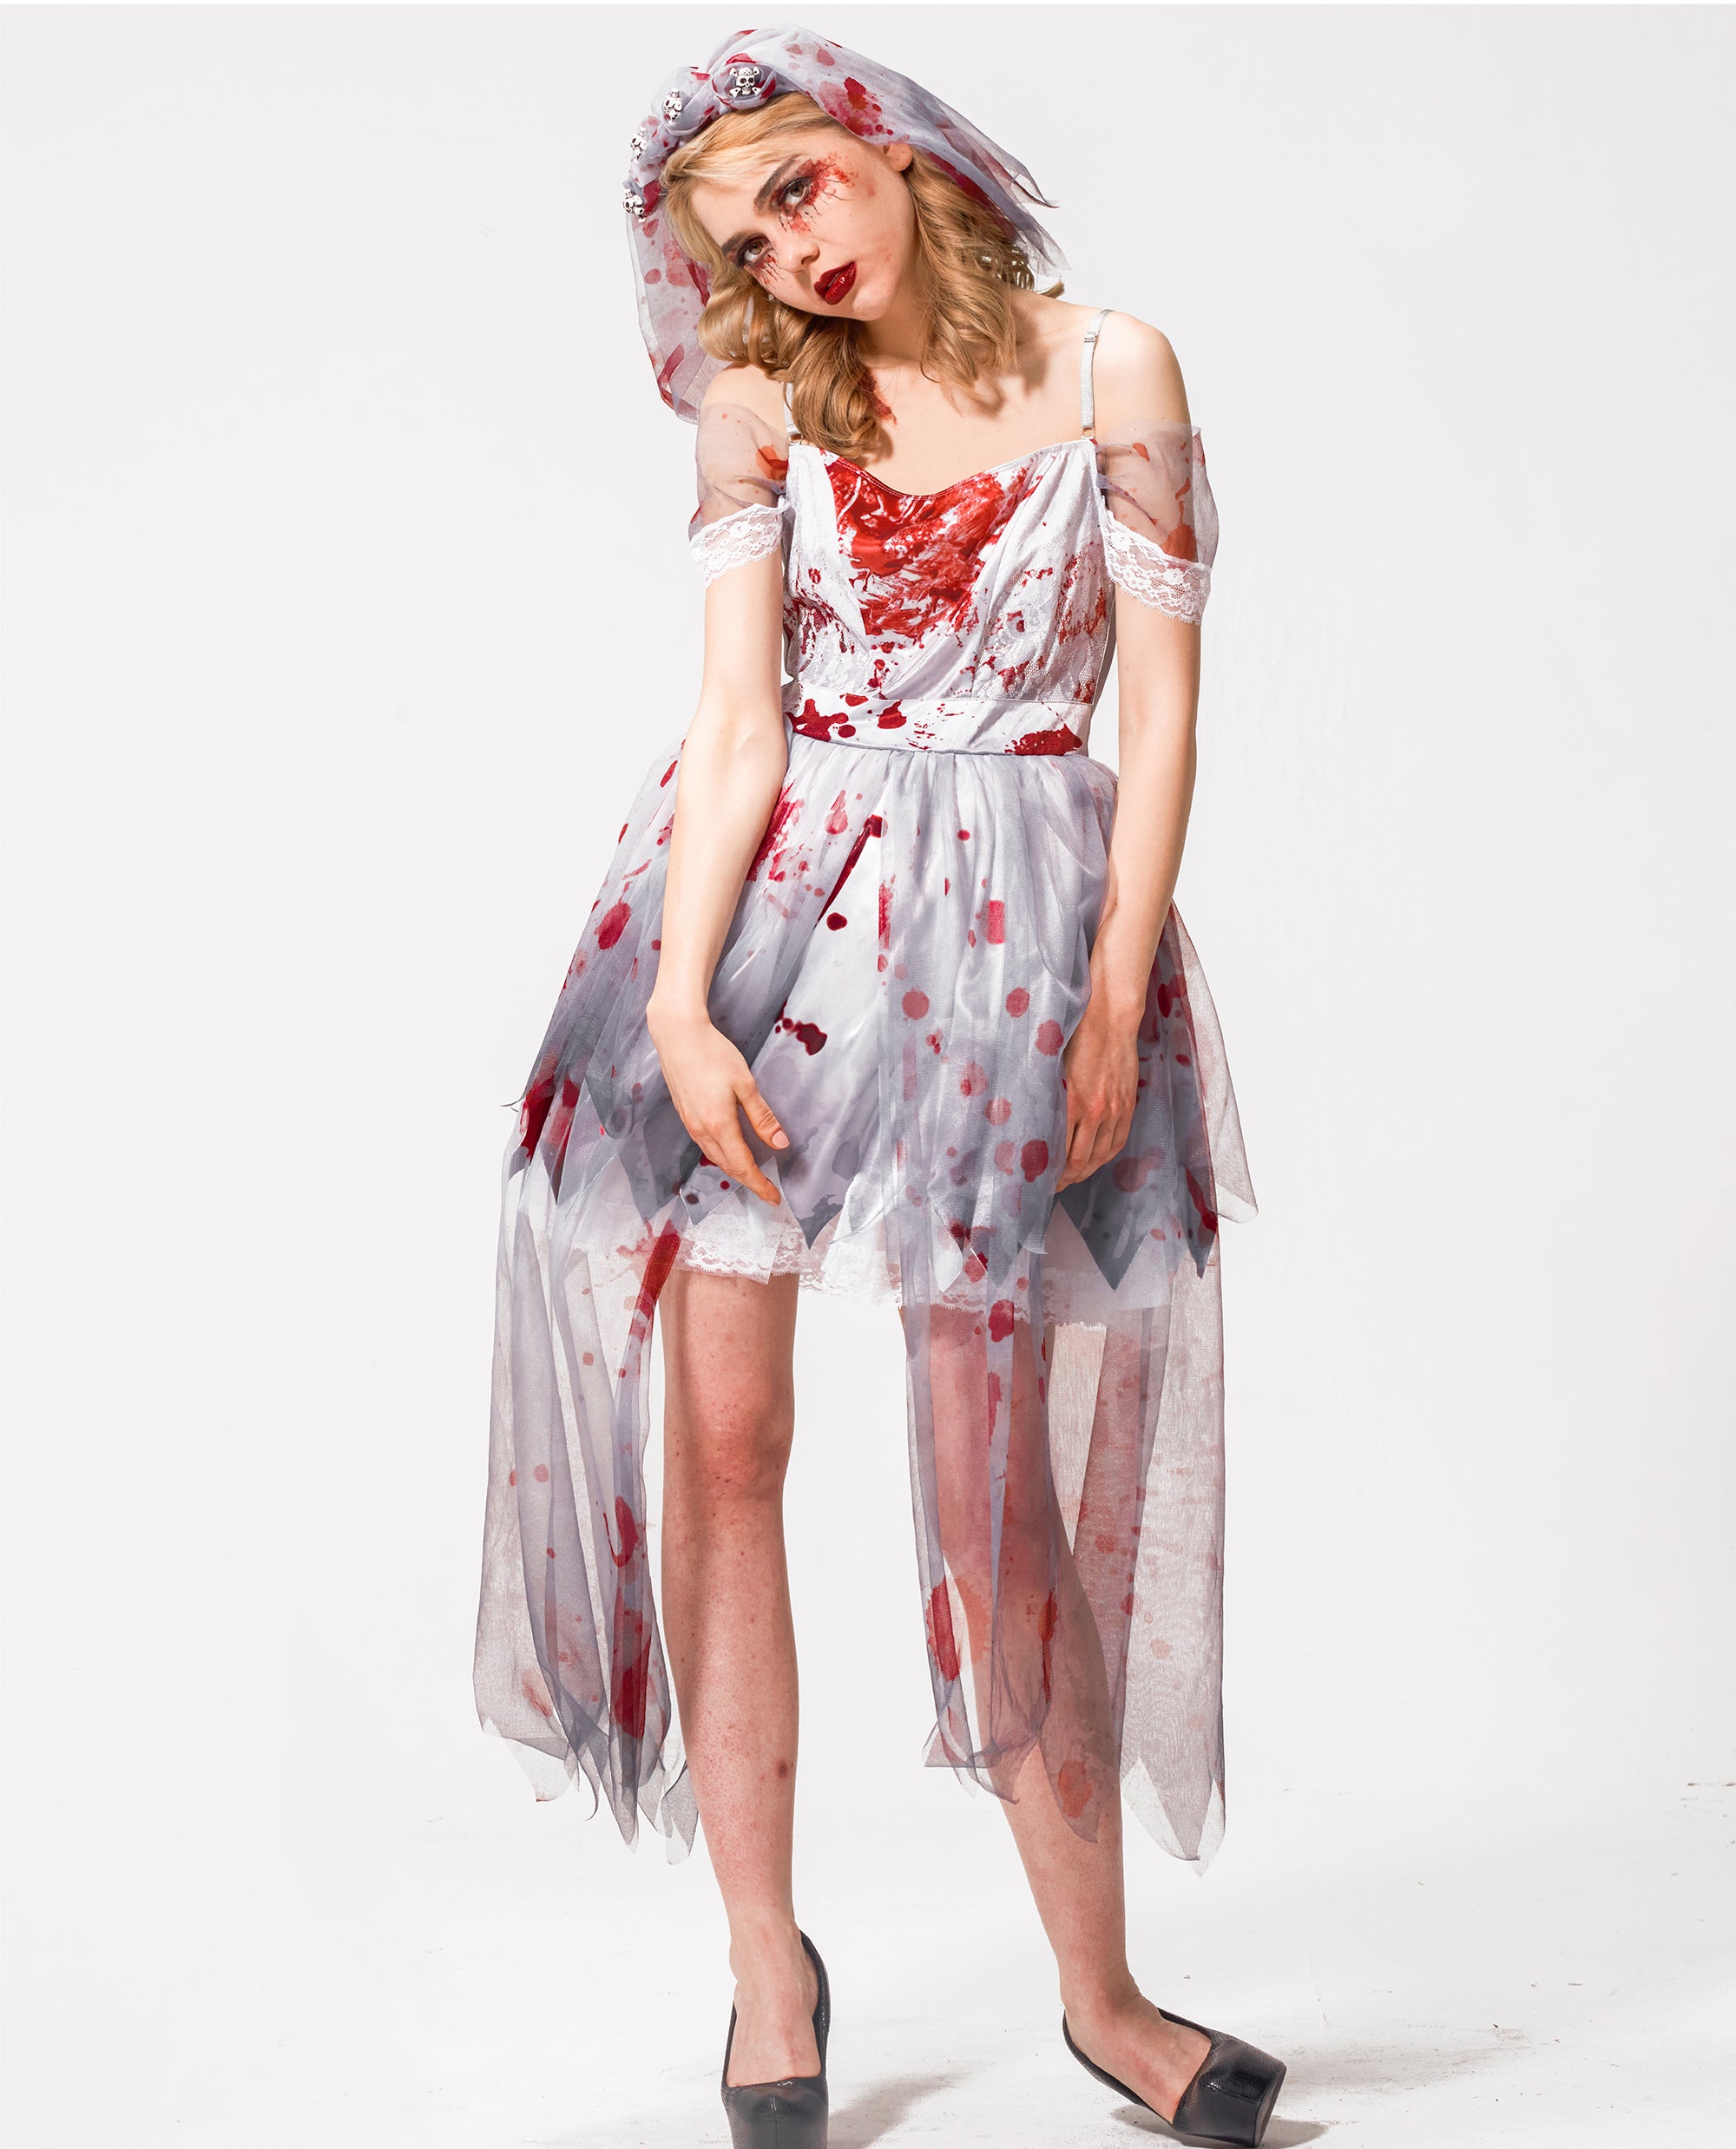 Little Miss Zombie Bride Costume